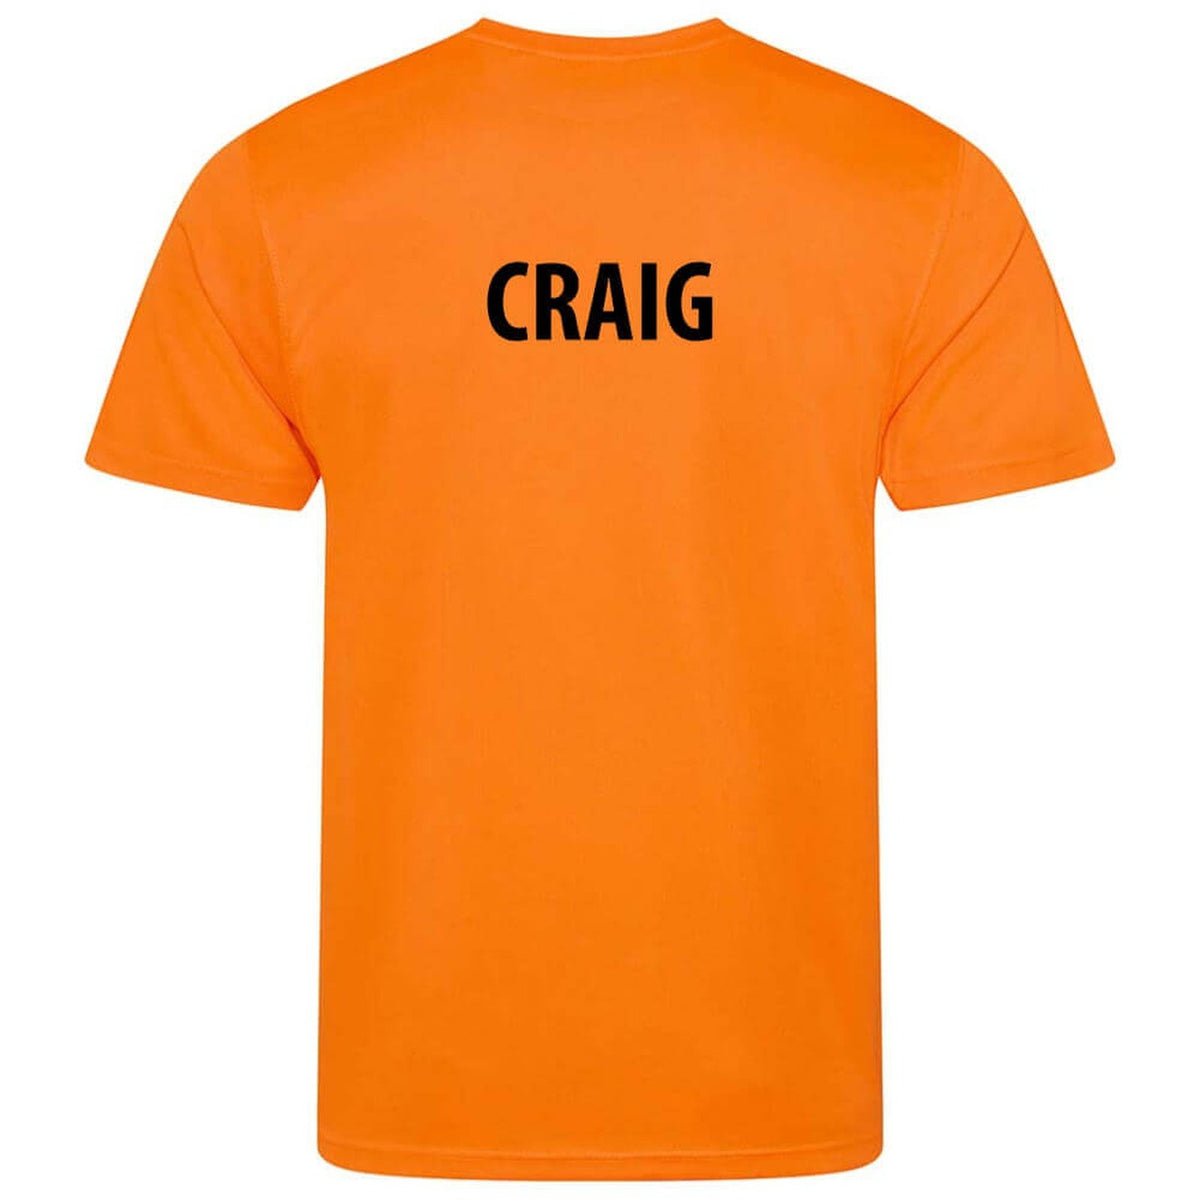 TWFRS RS - Tech T-Shirt - Electric Orange Adults